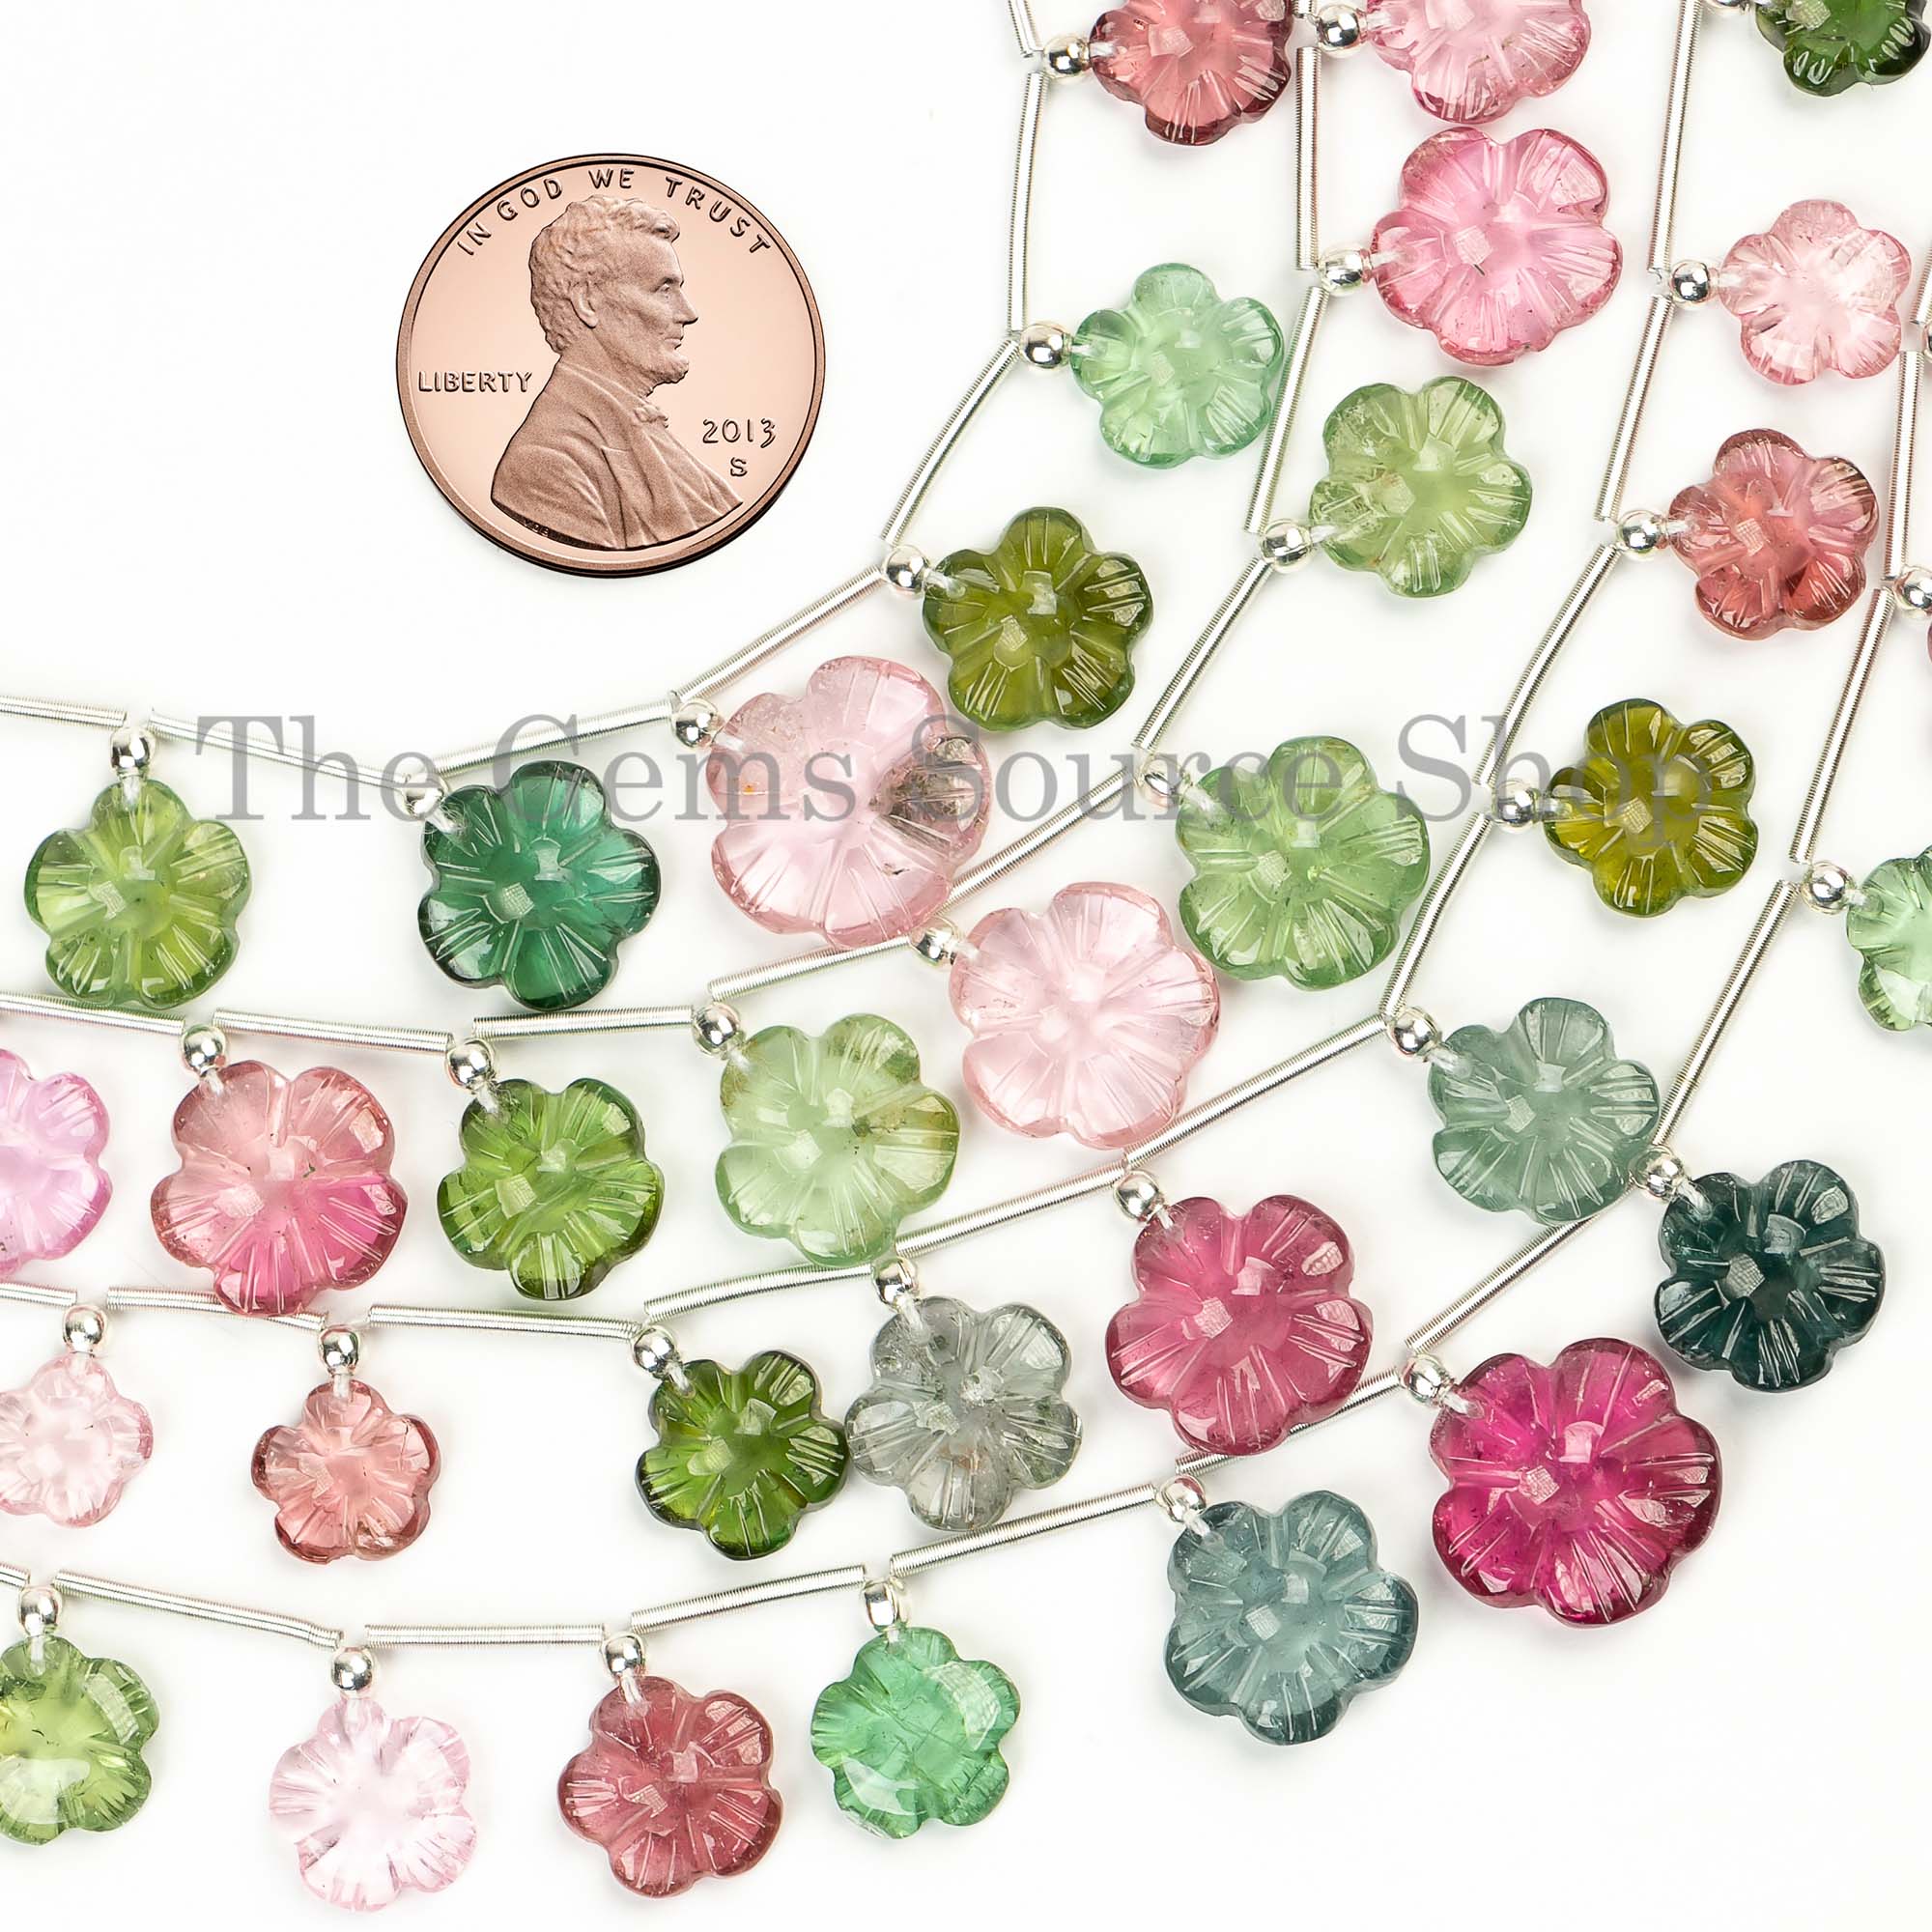 Multi Tourmaline Flower Carving Beads, 6-8mm, 13 Pieces Multi Tourmaline Beads, Gemstone Beads